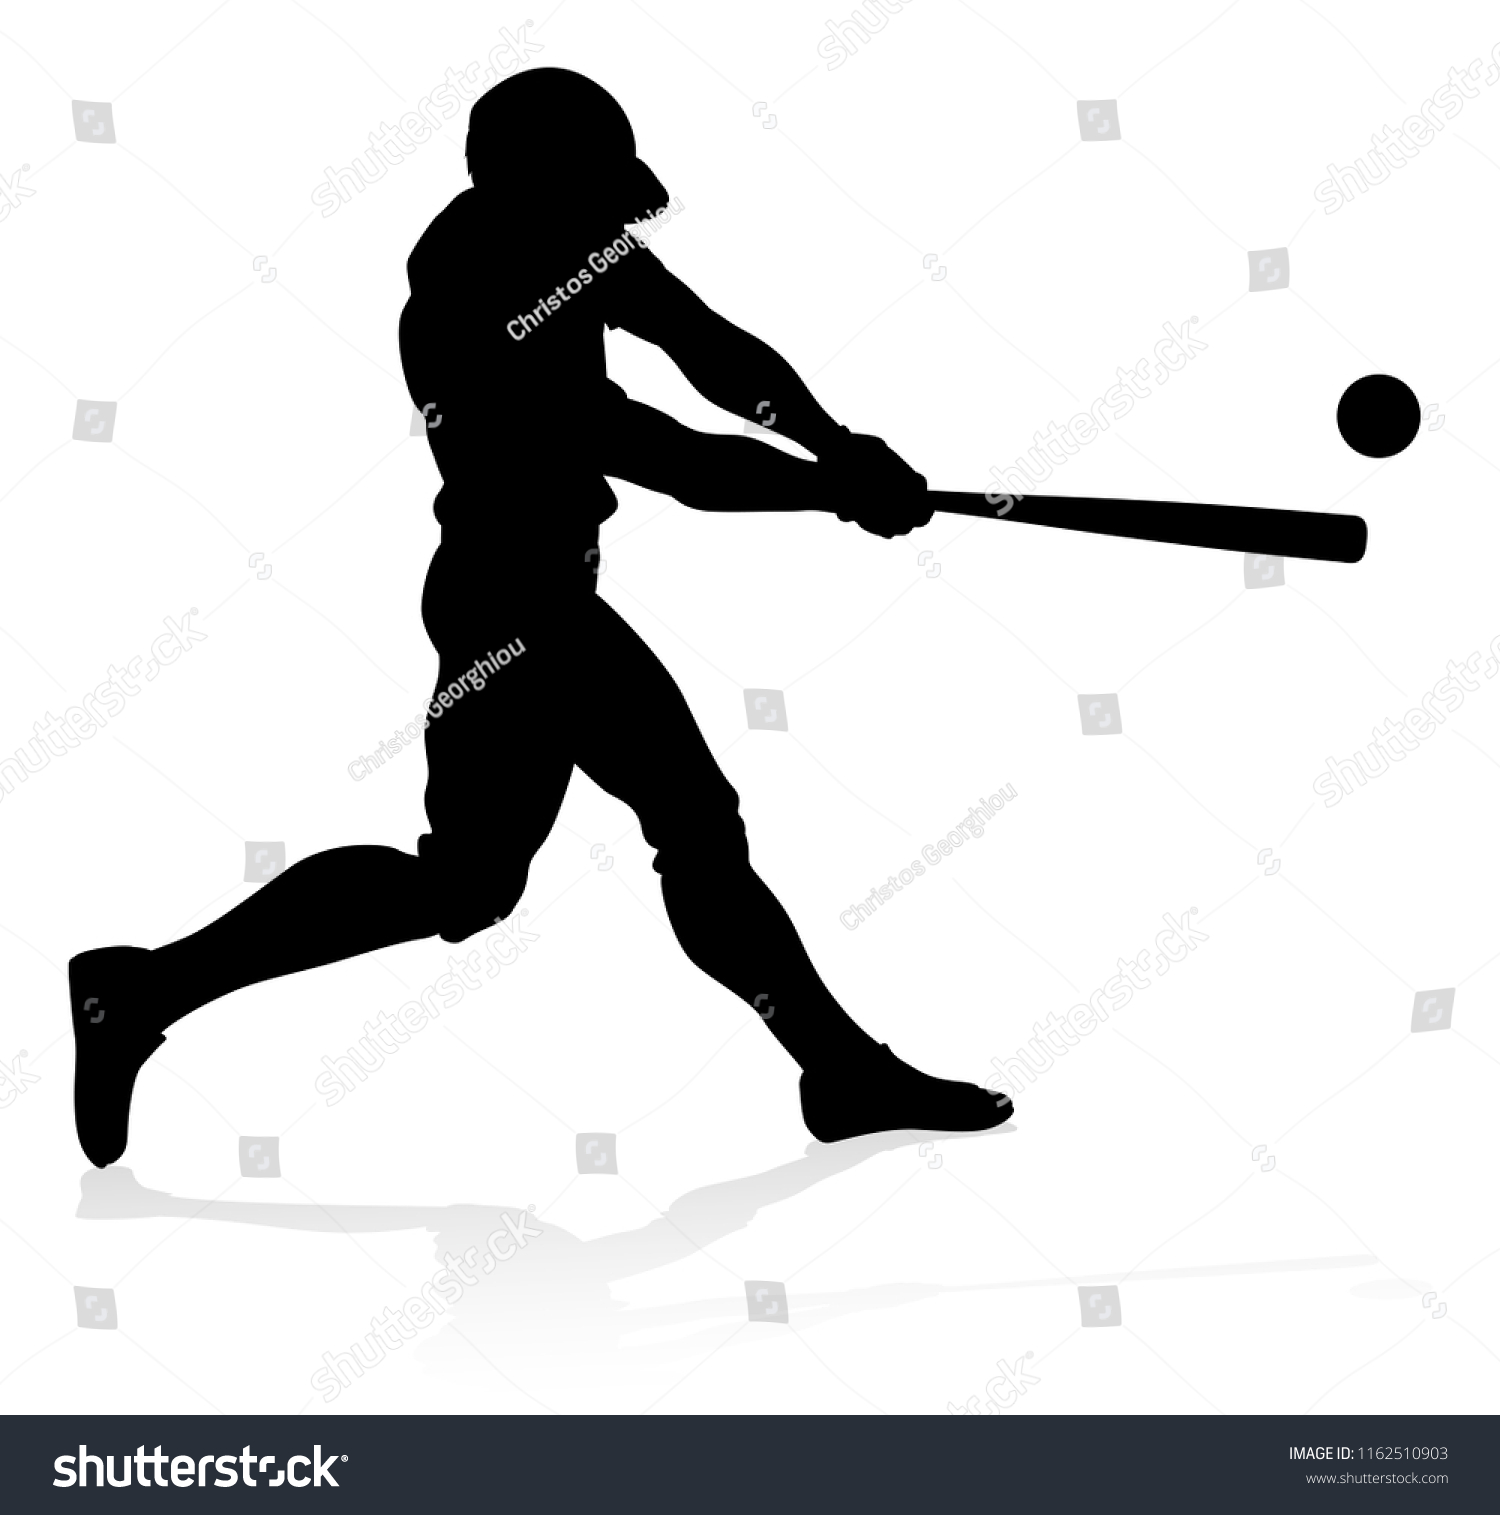 16,337 Softball player Images, Stock Photos & Vectors | Shutterstock